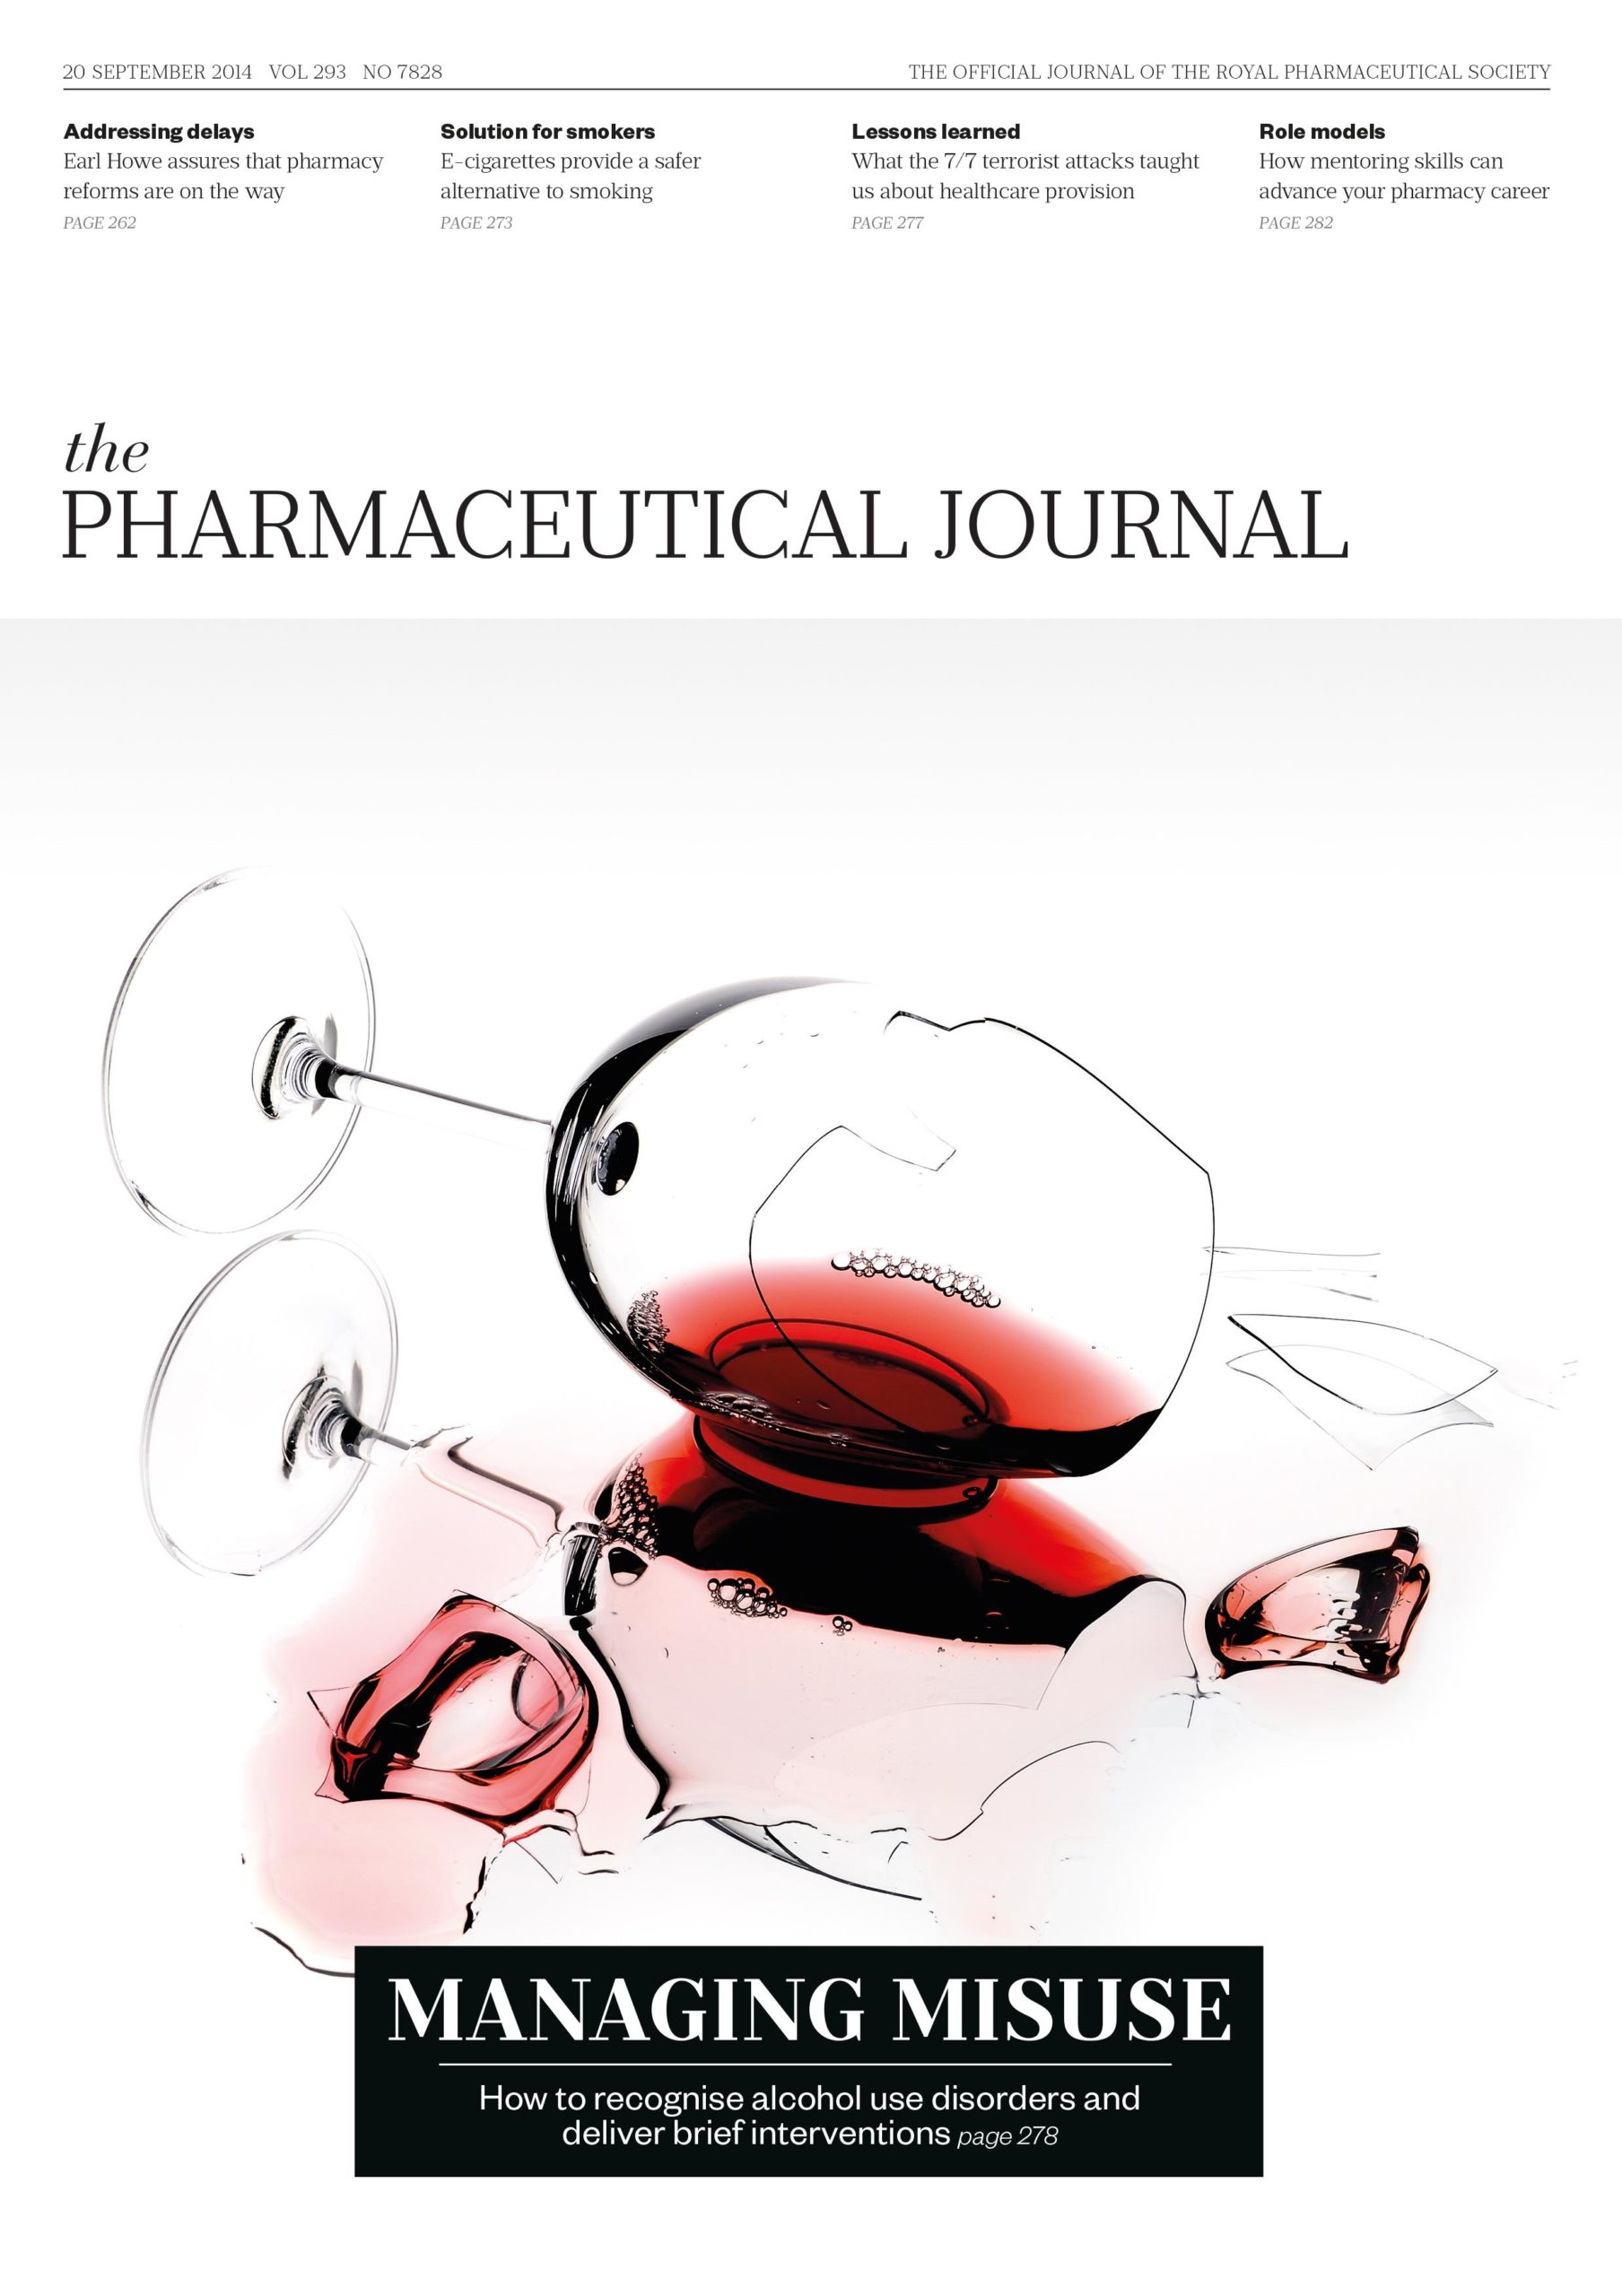 Publication issue cover for PJ, 20 September 2014, Vol 293, No 7828